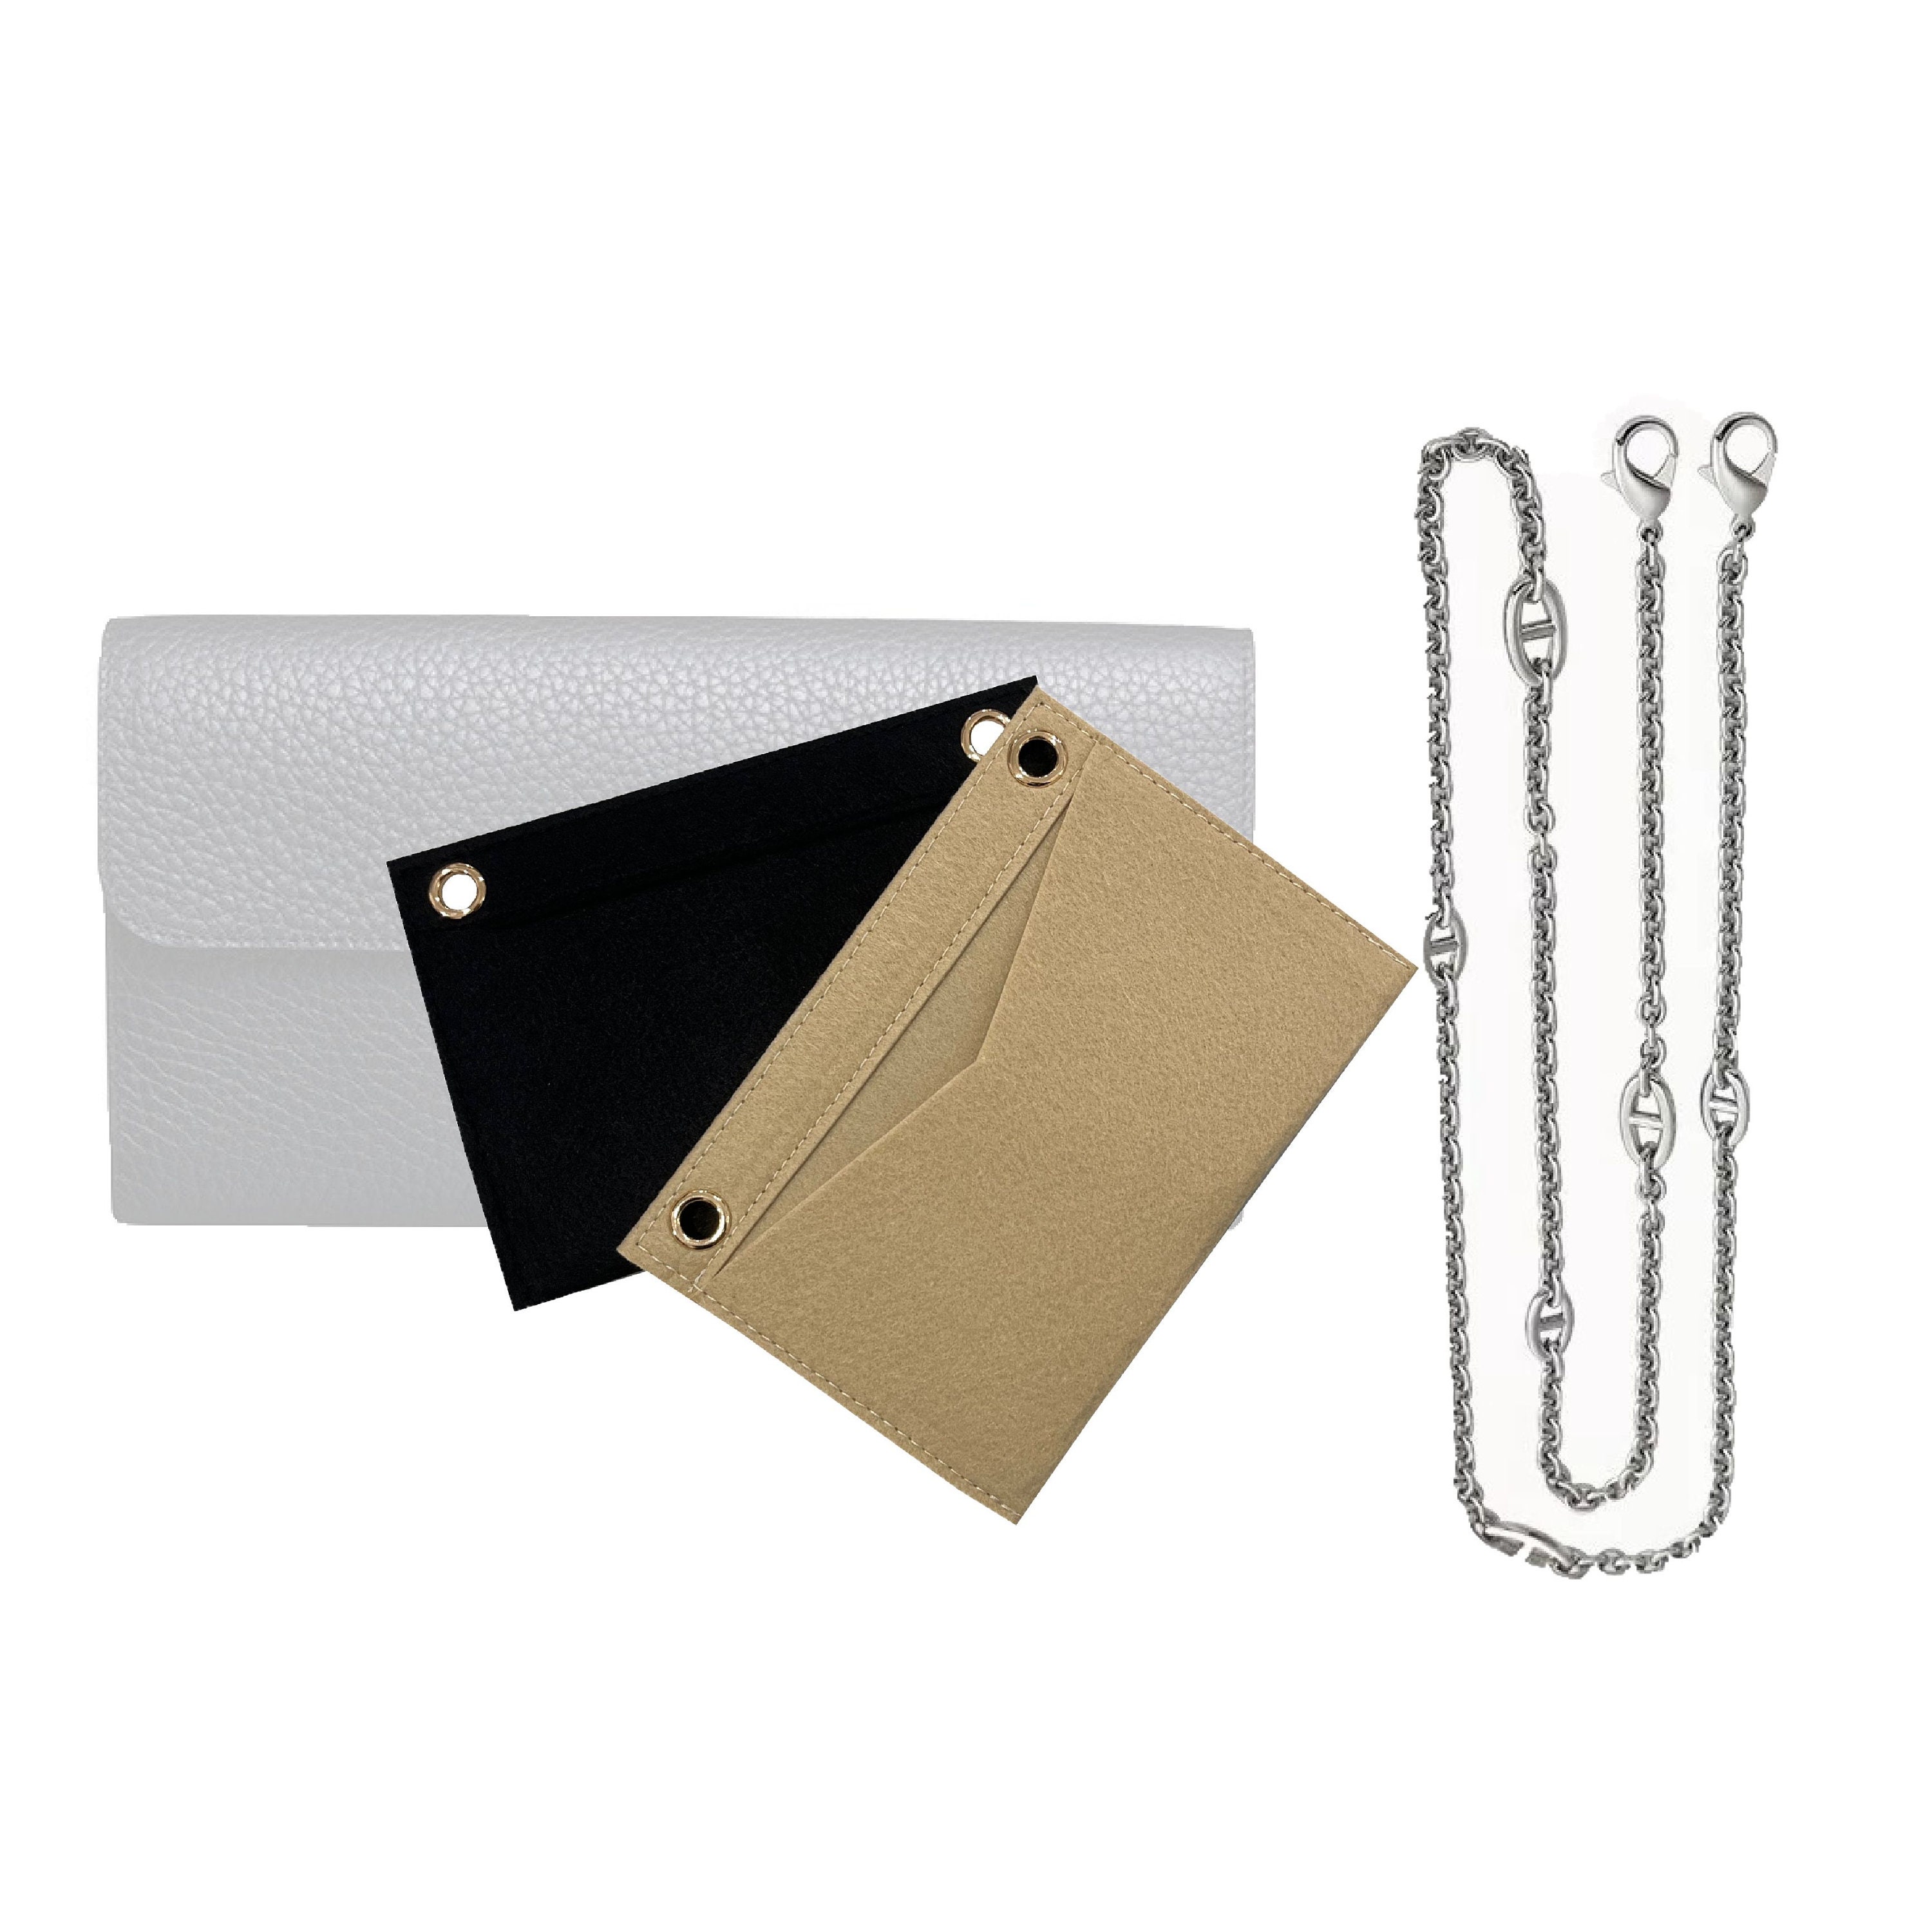 Kelly Wallet Conversion Kit Conversion Kit for Kelly Wallet Insert Strap  Kelly Wallet on Chain Gold (Orange, 120cm Silver Chain)